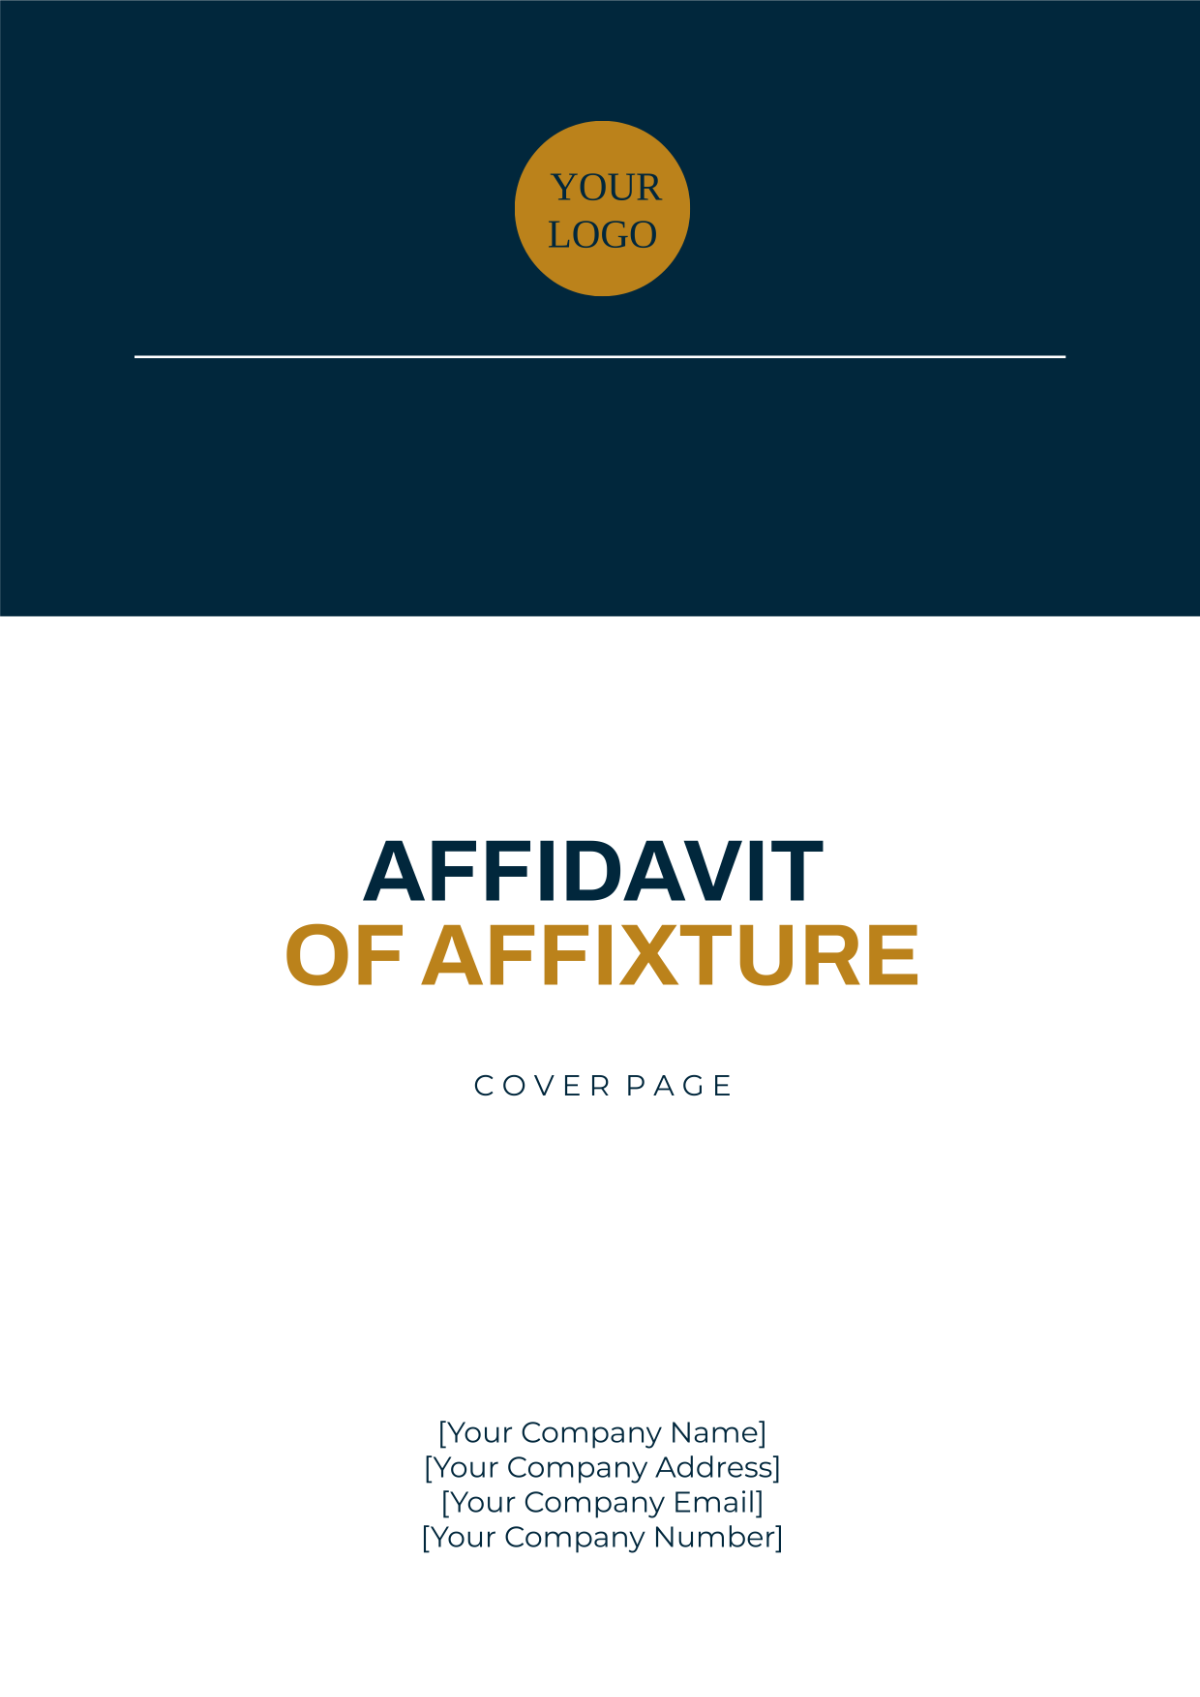 Affidavit of Affixture Cover Page